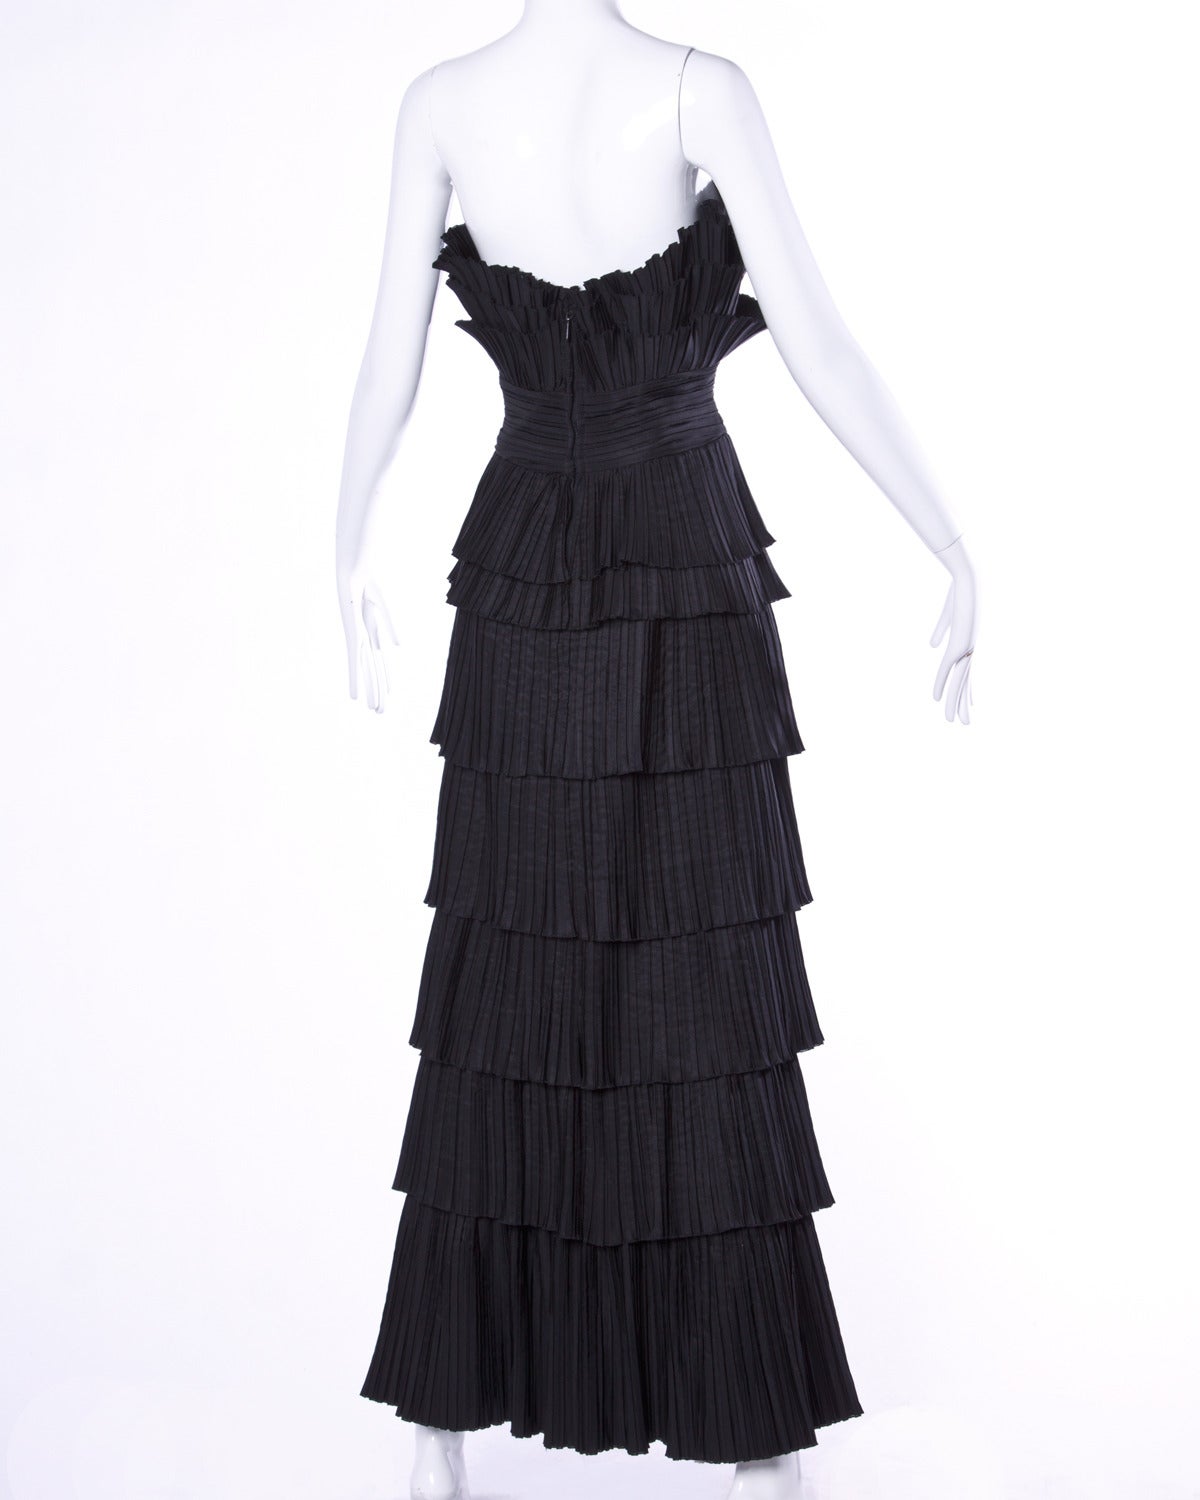 Louis Feraud Vintage Strapless Black Sculptural Origami Pleated Dress 2